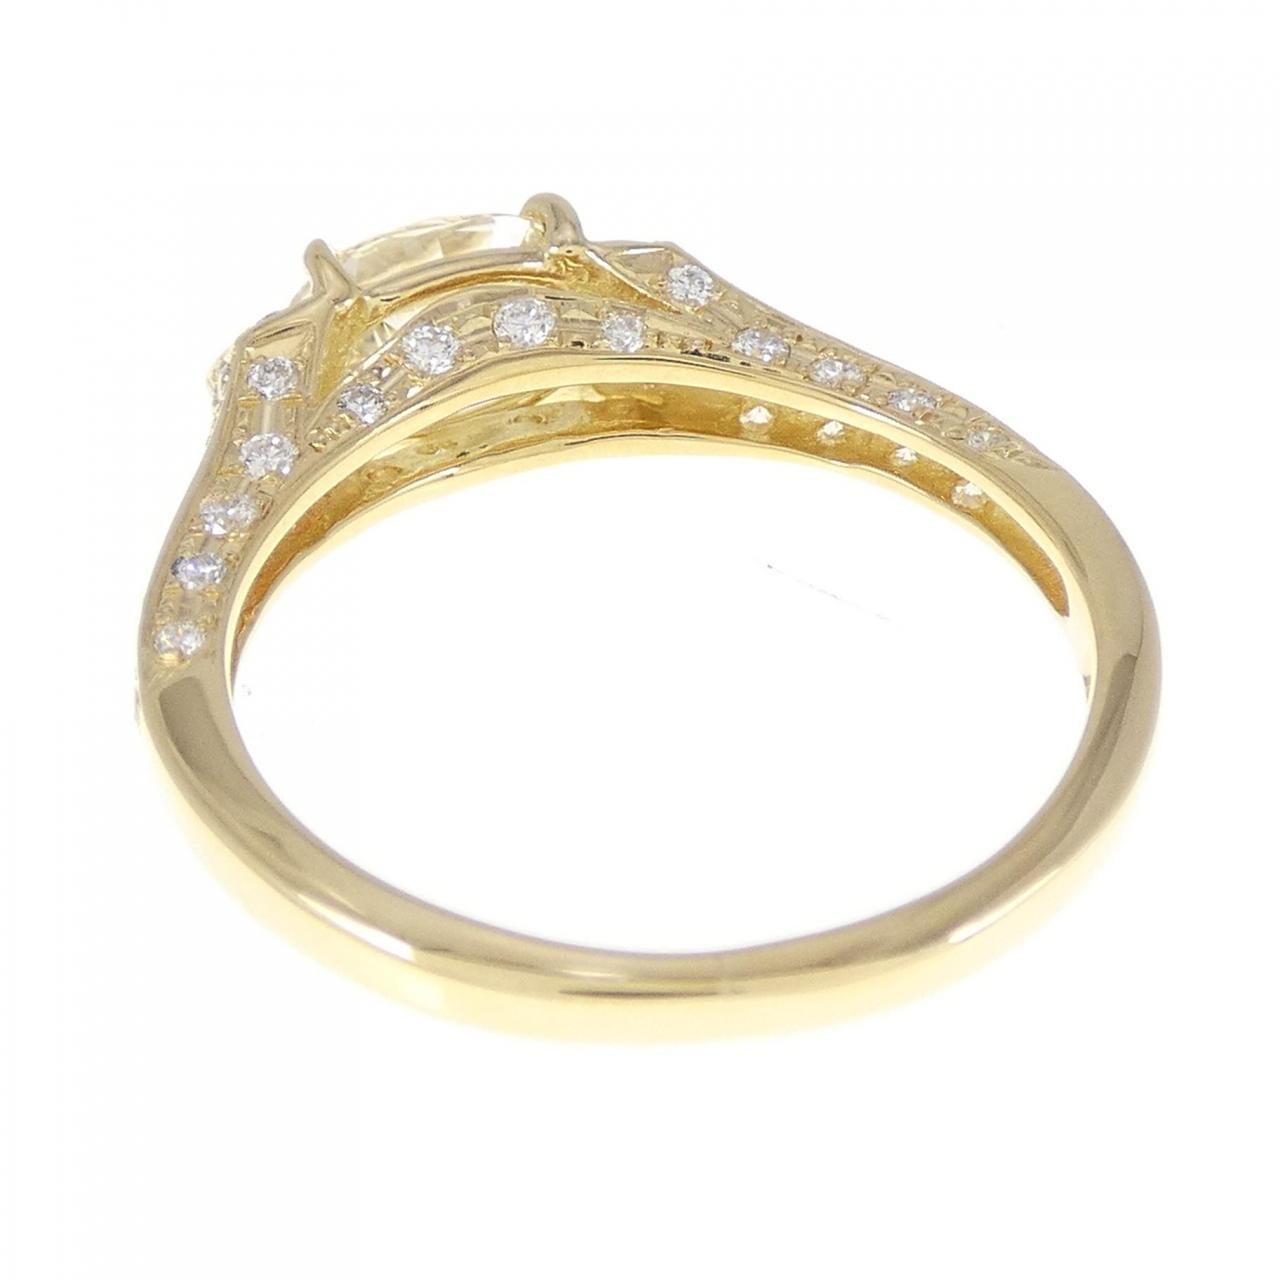 [Remake] K18YG Diamond ring 1.007CT VLY SI1 oval cut